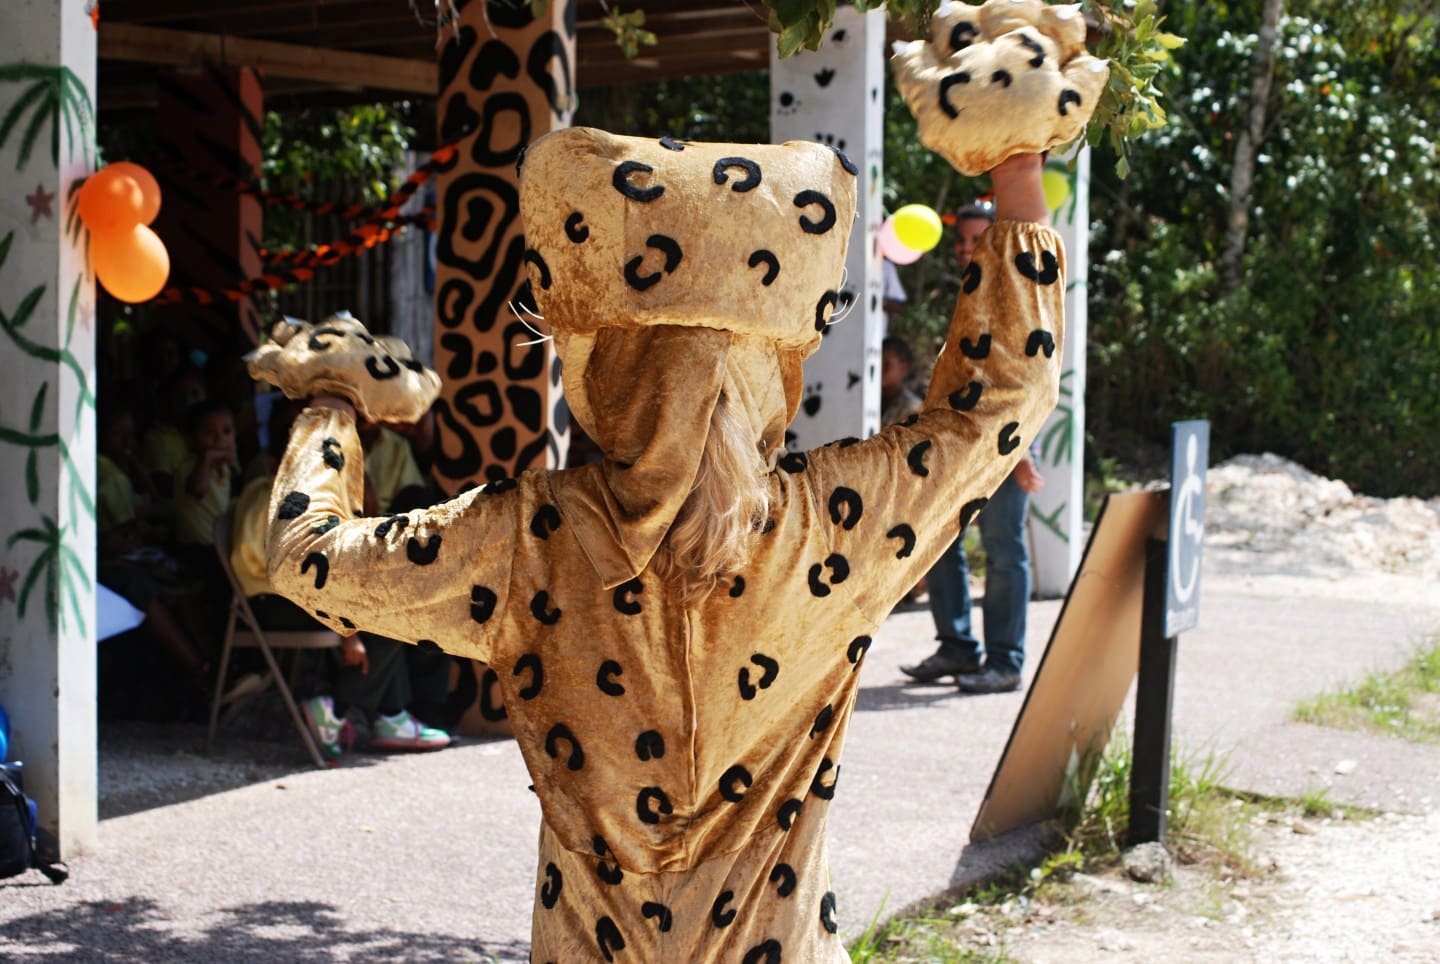 Jaguar Costume at the Belize Zoo